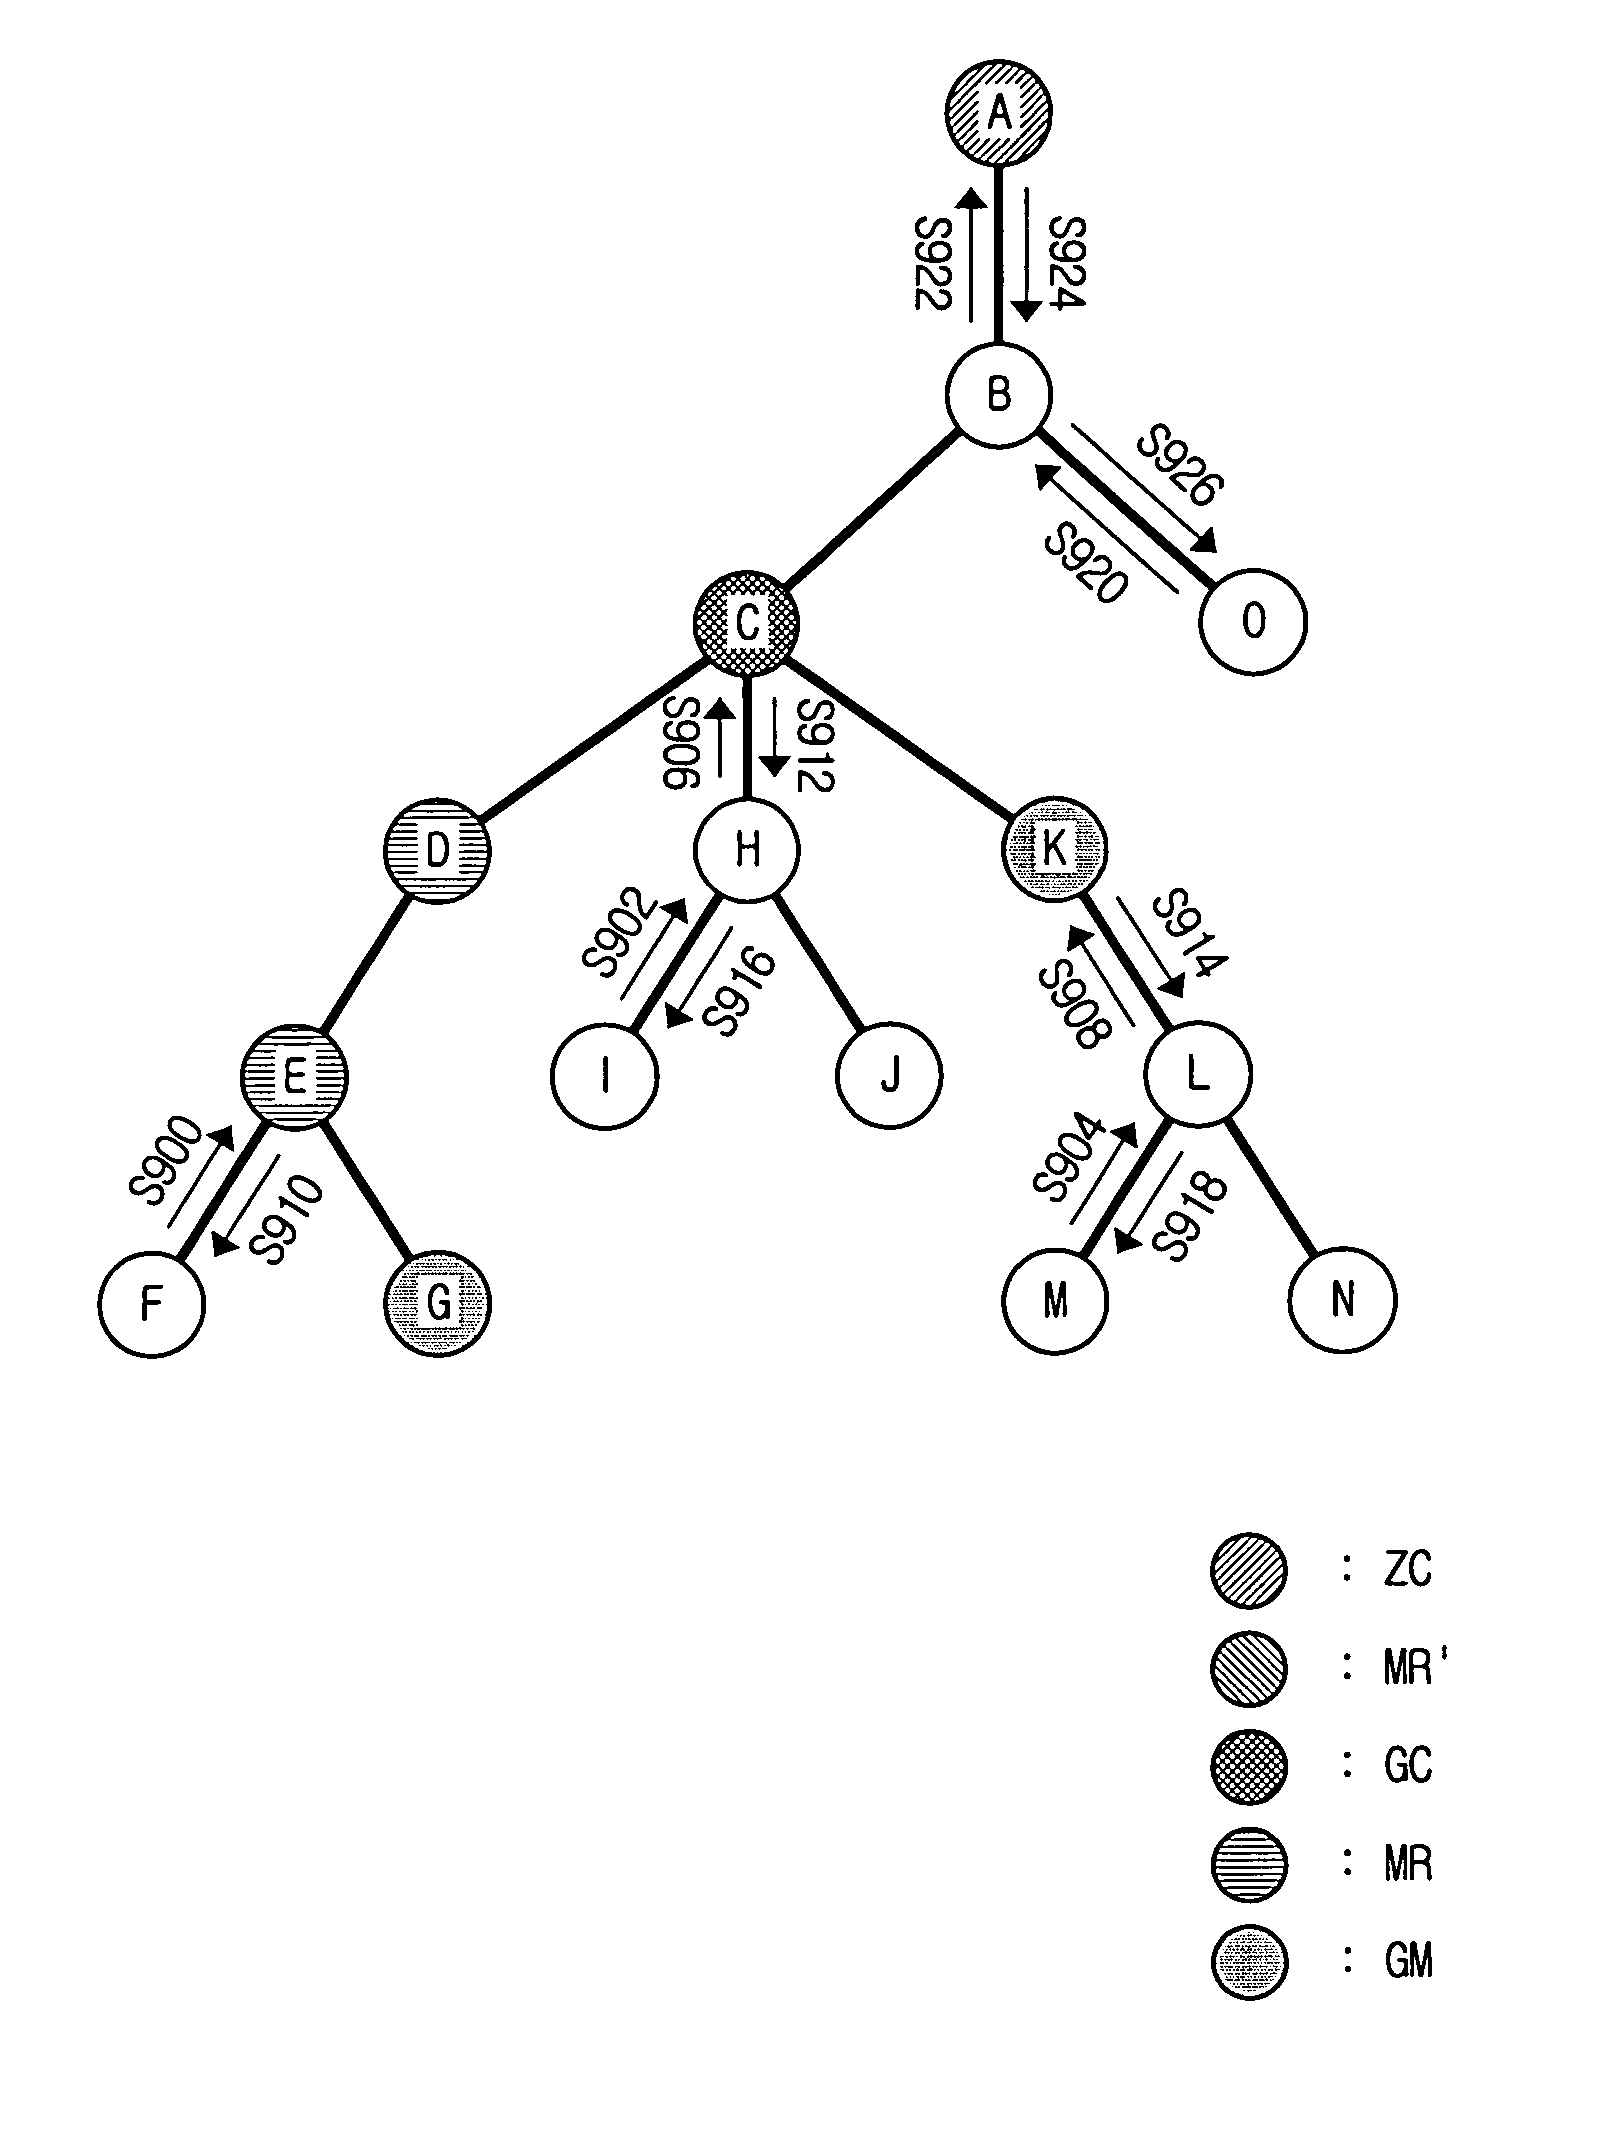 Multicast method in zigbee network